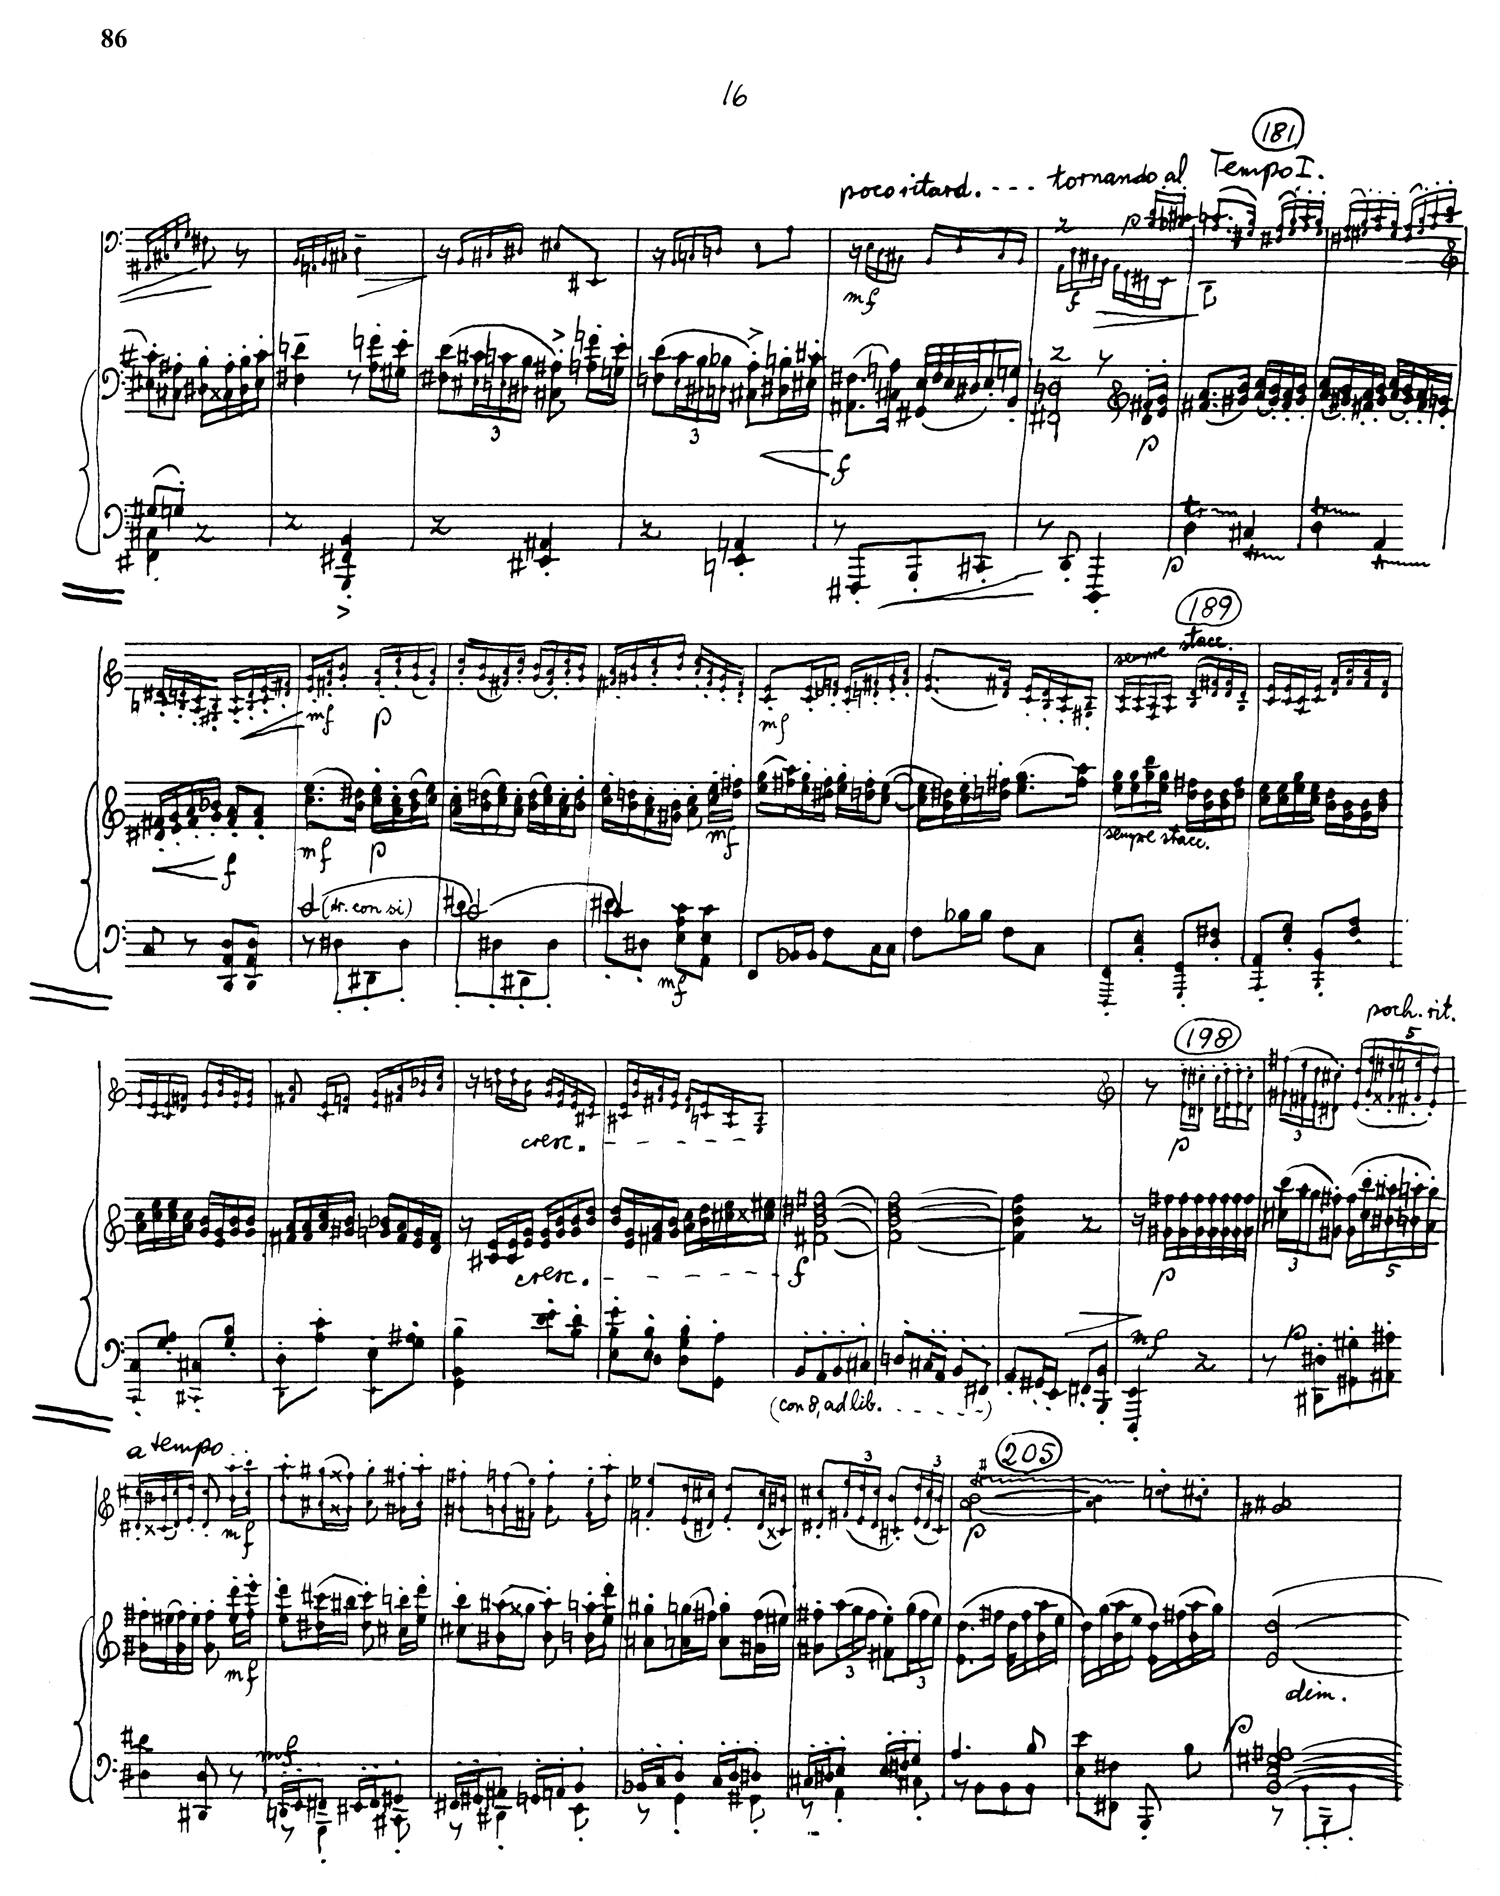 II. <i>Giuoco delle coppie</i> - mm. 164 to 180 — The Orchestral Bassoon